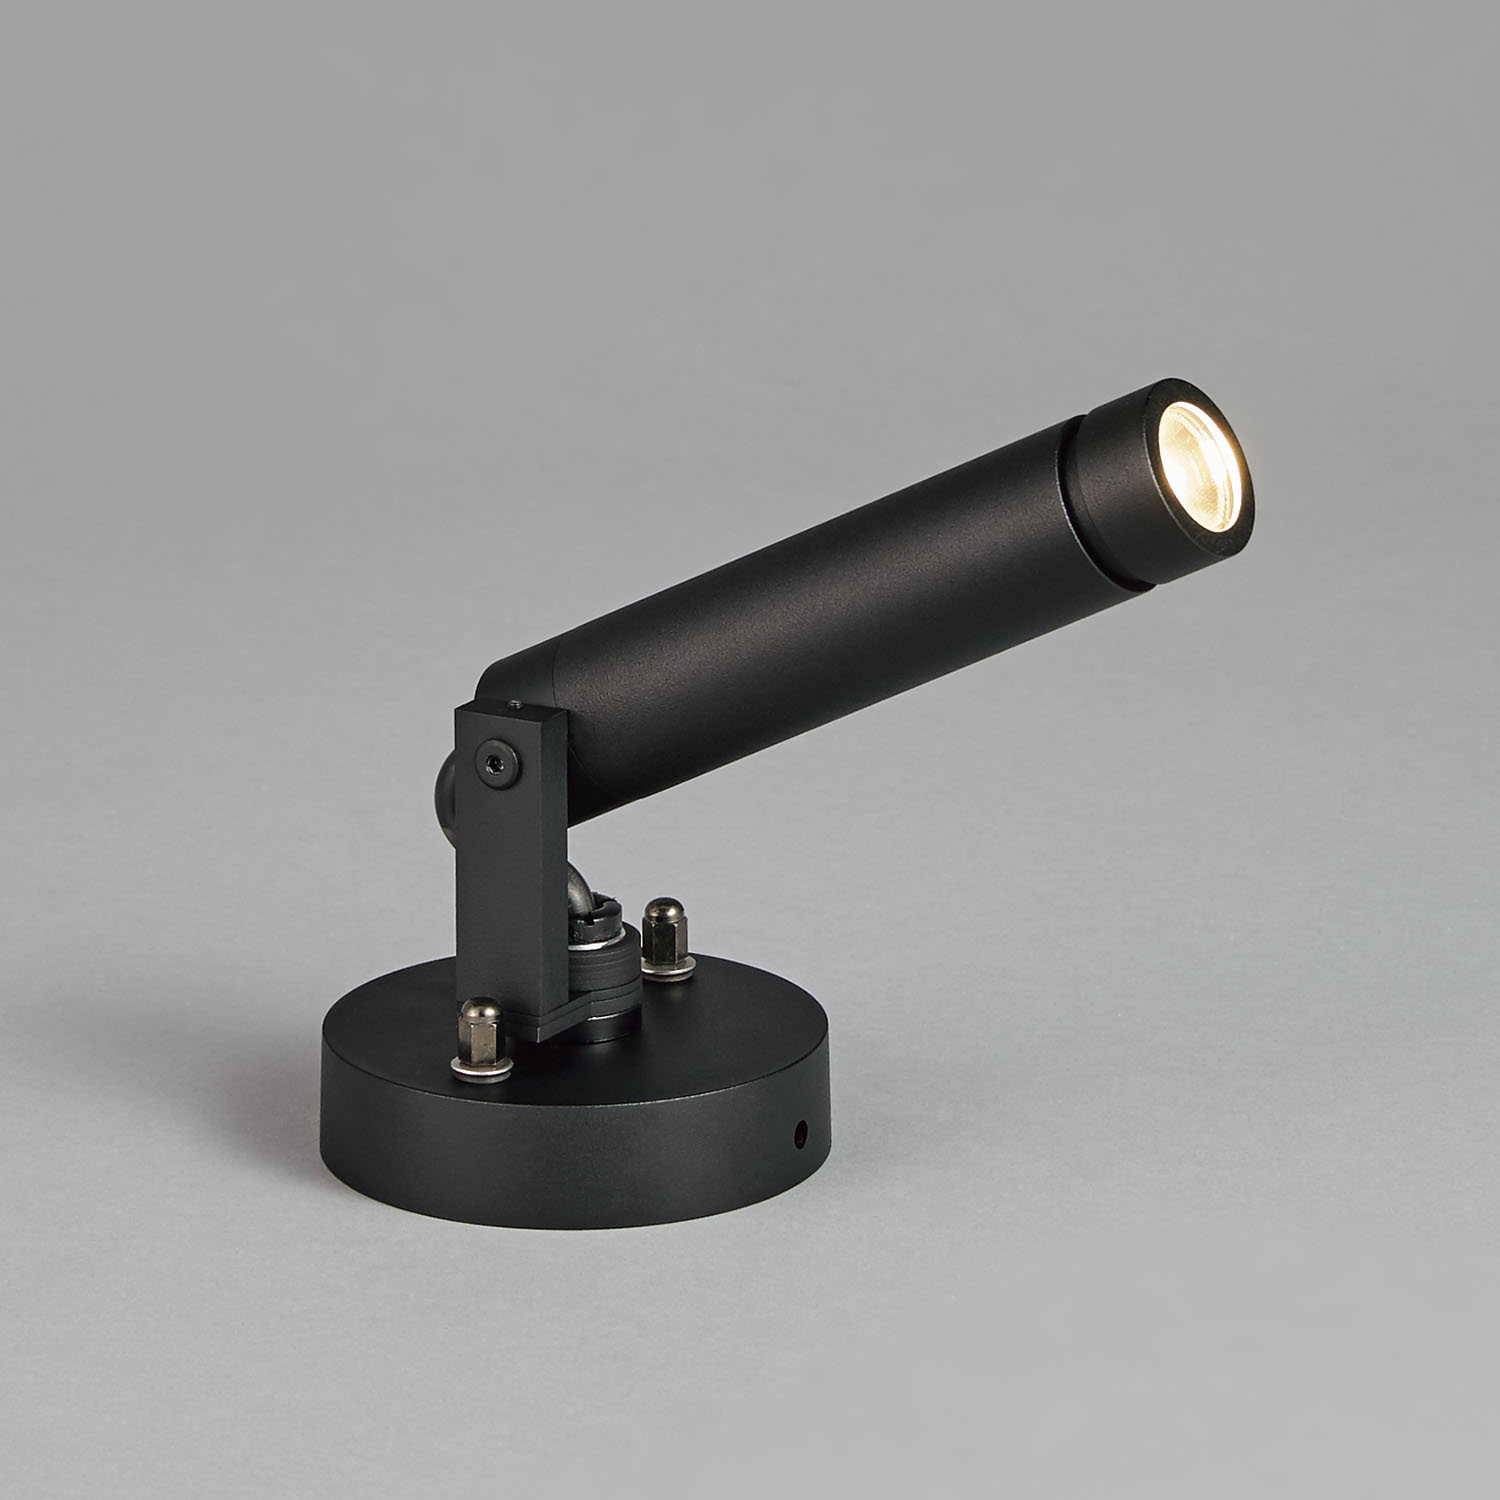 AD-3210-L 山田照明 屋外スポットライト 黒色 LED 電球色 調光 20度 - 2